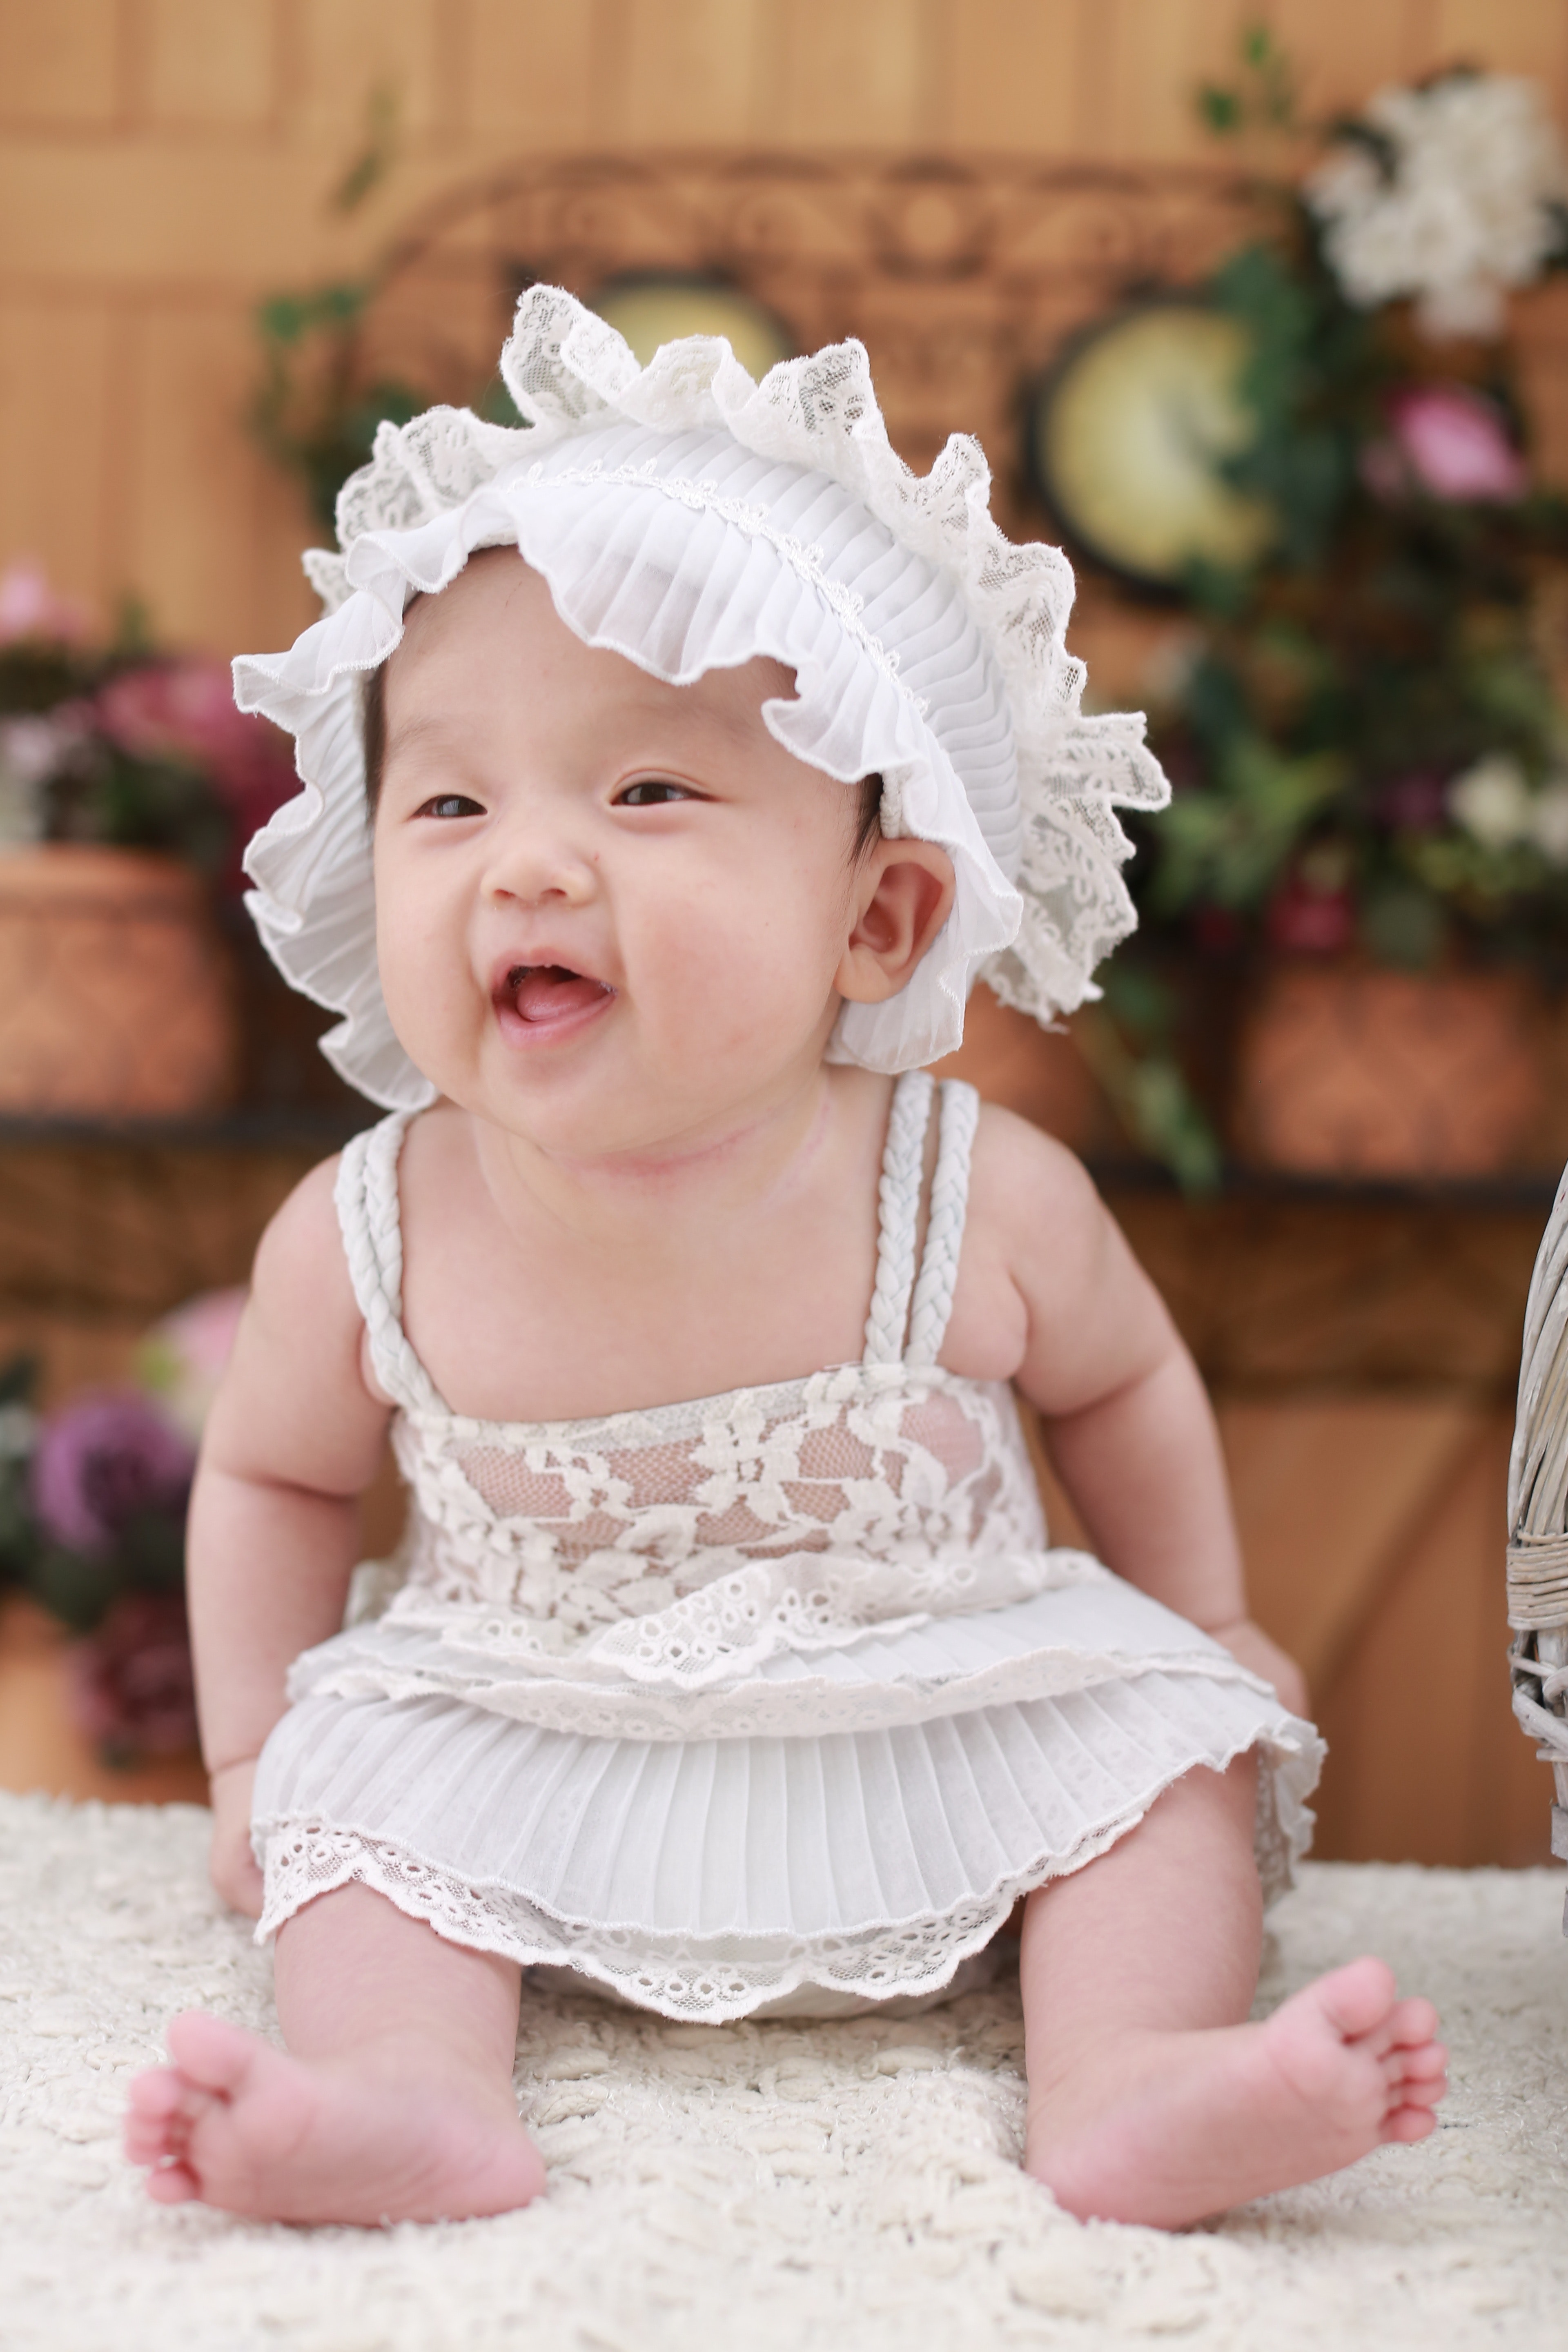 Baby in white dress with white headdress photo